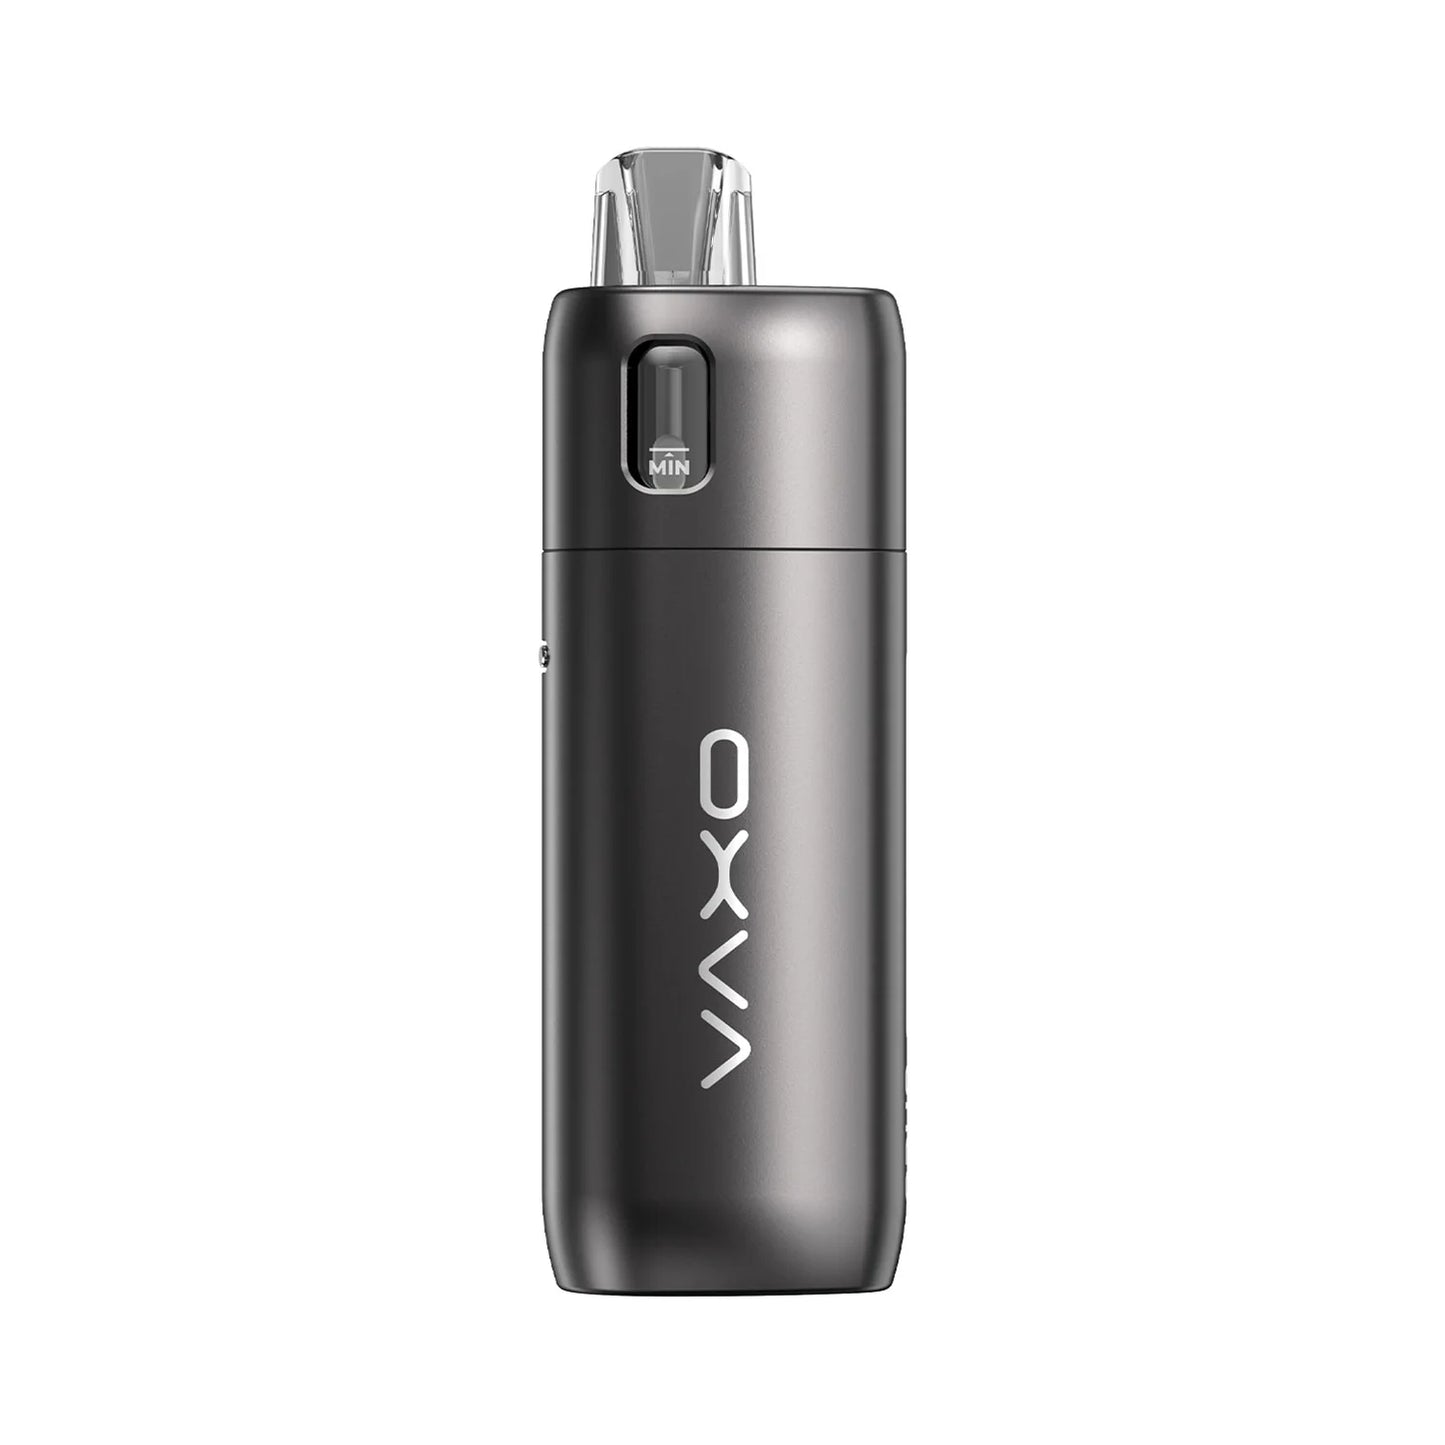 Oxva Oneo Pod Mod Kit Space Gray